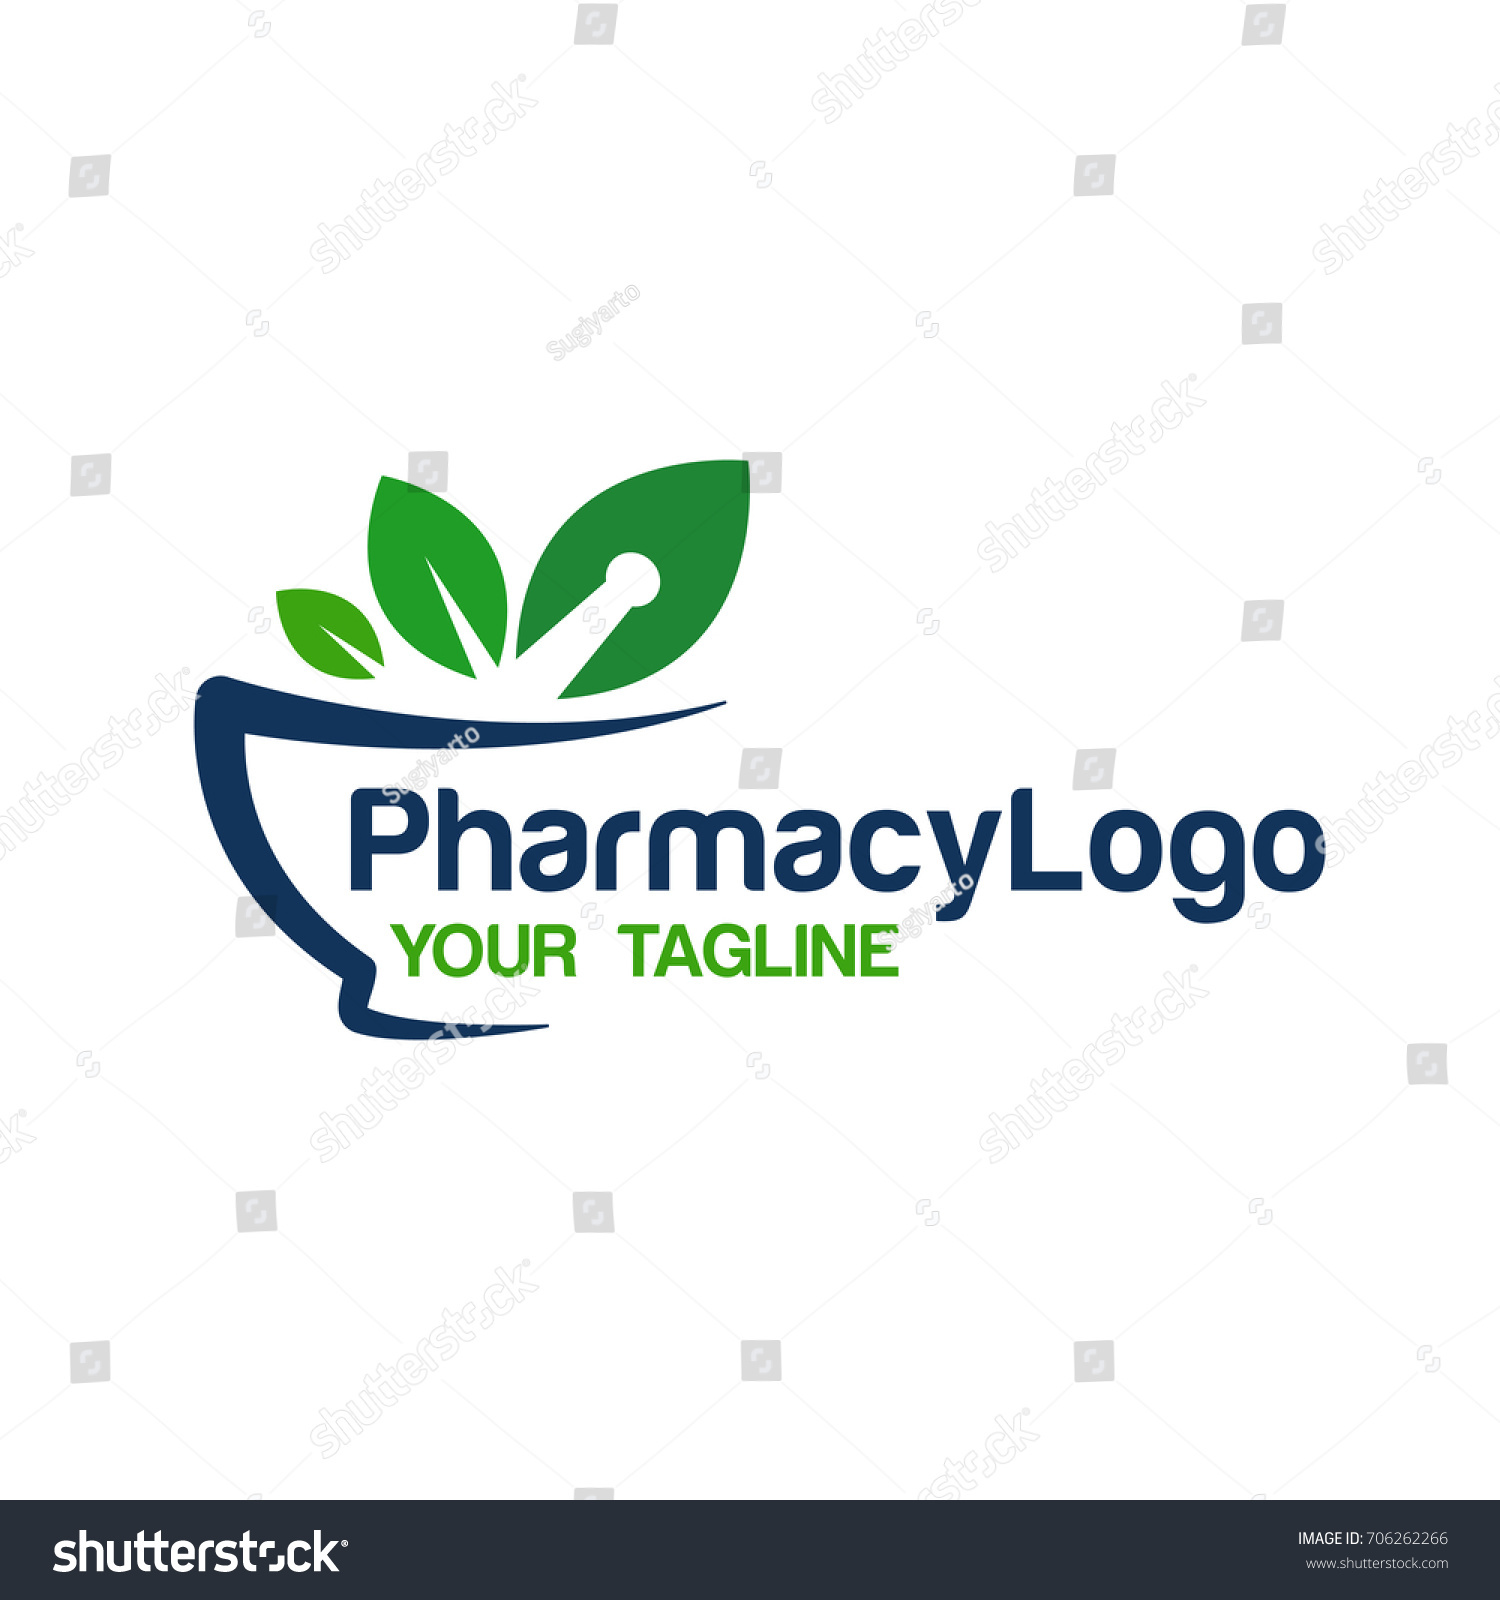 170,690 Pharmacy logo Images, Stock Photos & Vectors | Shutterstock